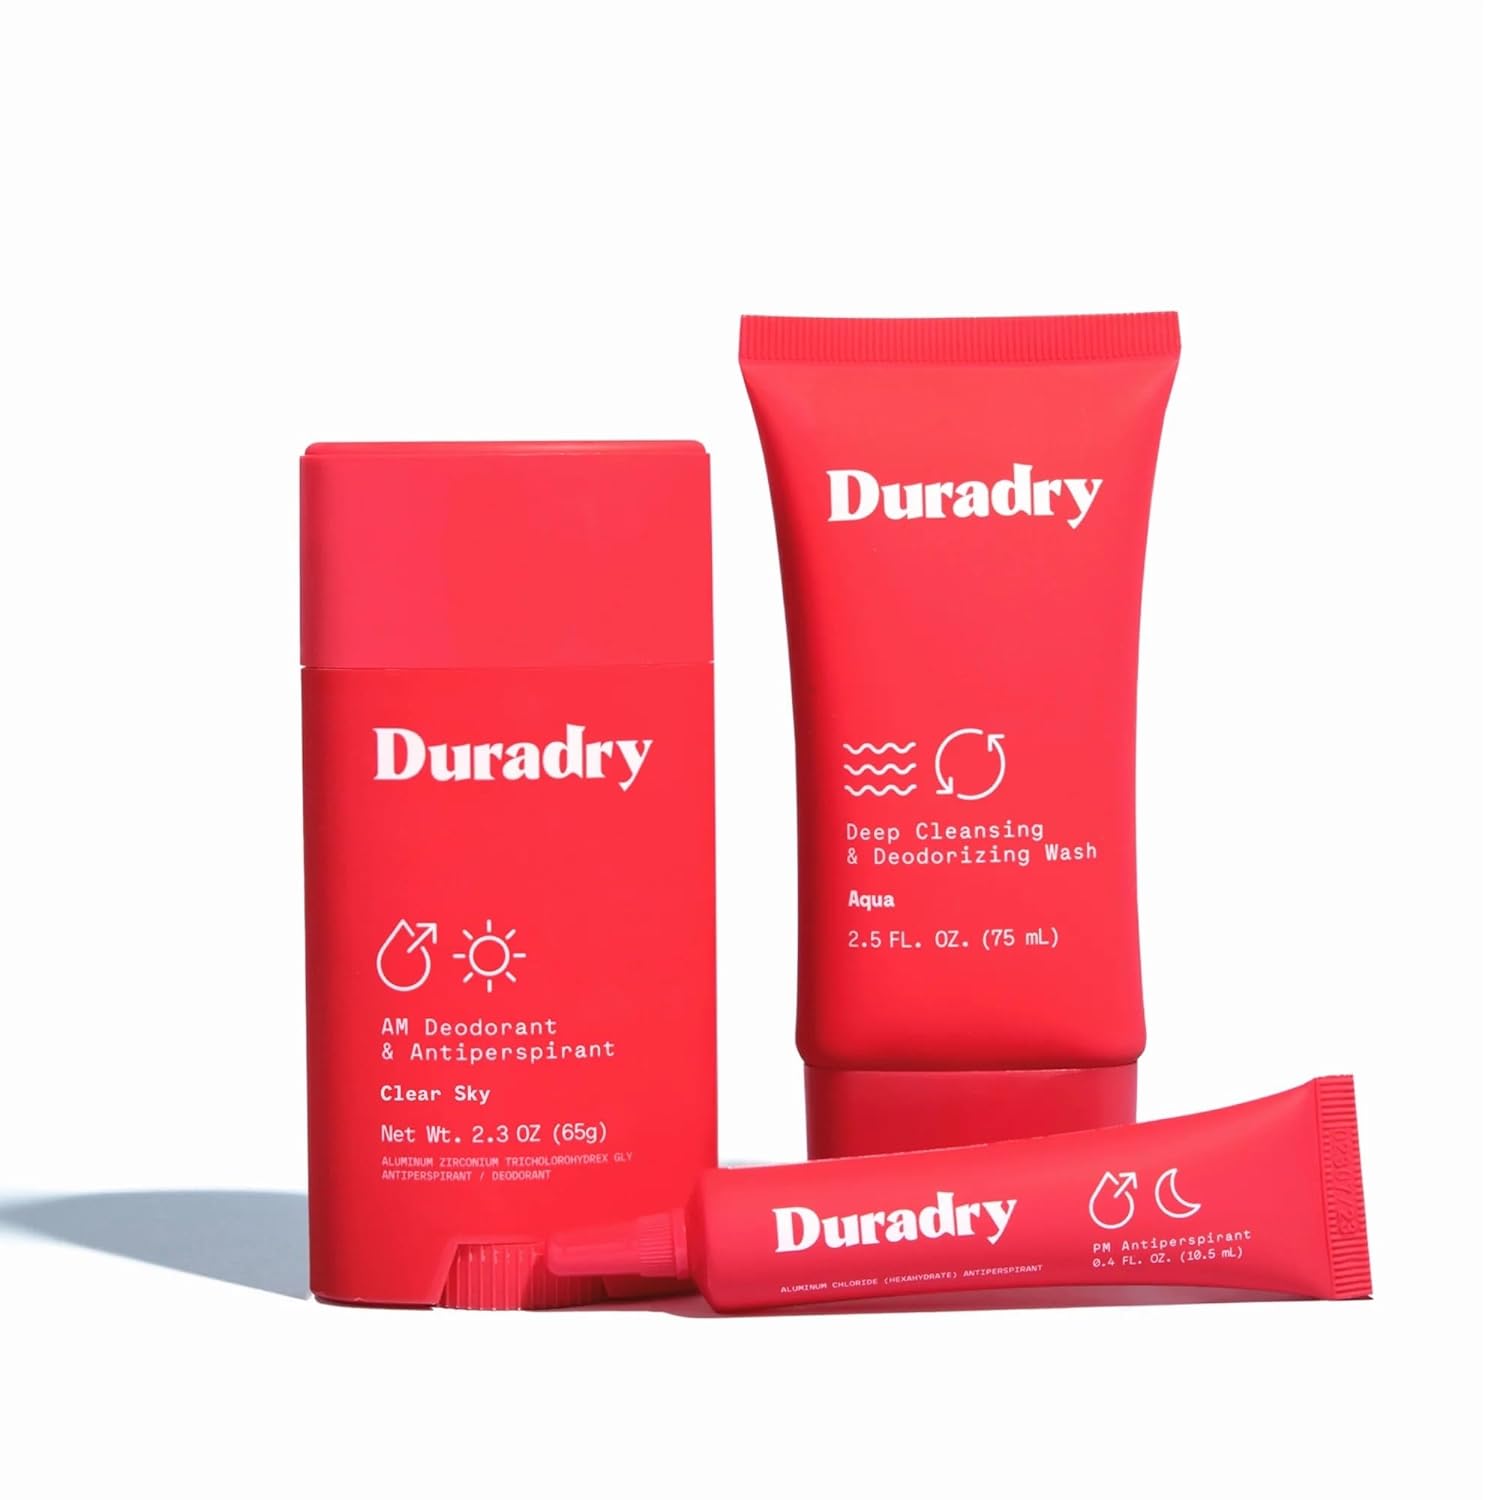 Duradry 3-Step Protection System - AM Deodorant, PM Antiperspirant Gel, Deep Cleansing & Deodorizing Body Wash, Prescription Strength, Excessive Sweating, Hyperhidrosis, Block Sweat & Odor - Clear Sky